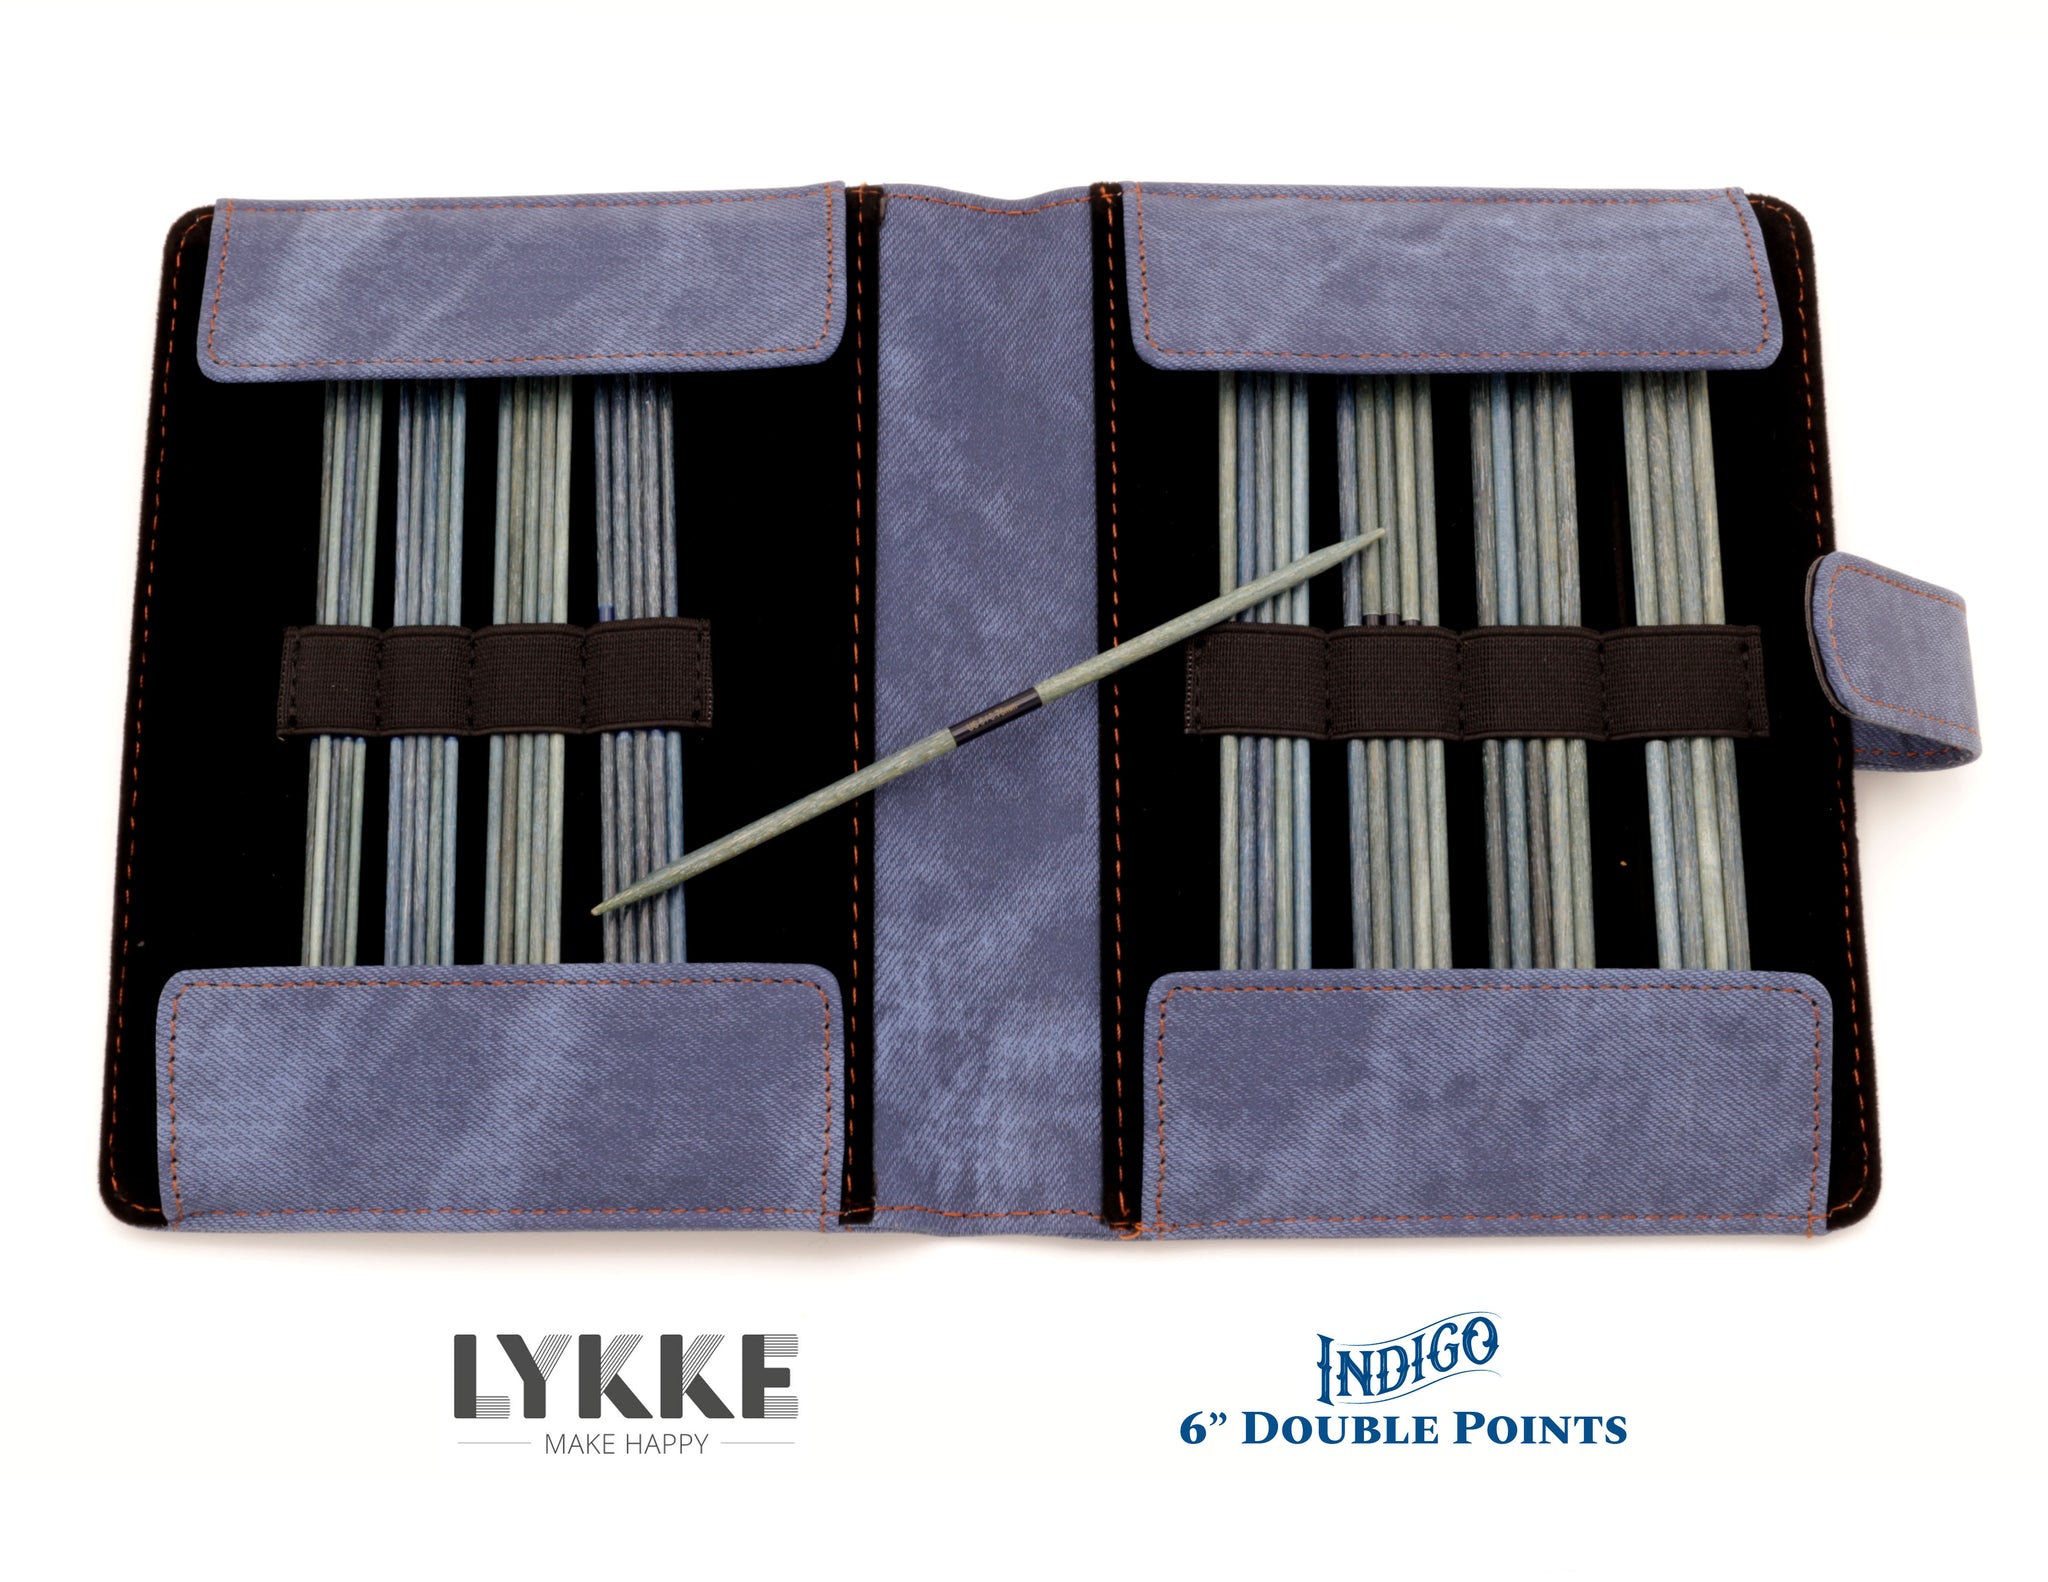 LYKKE - Driftwood 6 Double-Pointed Knitting Needle Gift Sets